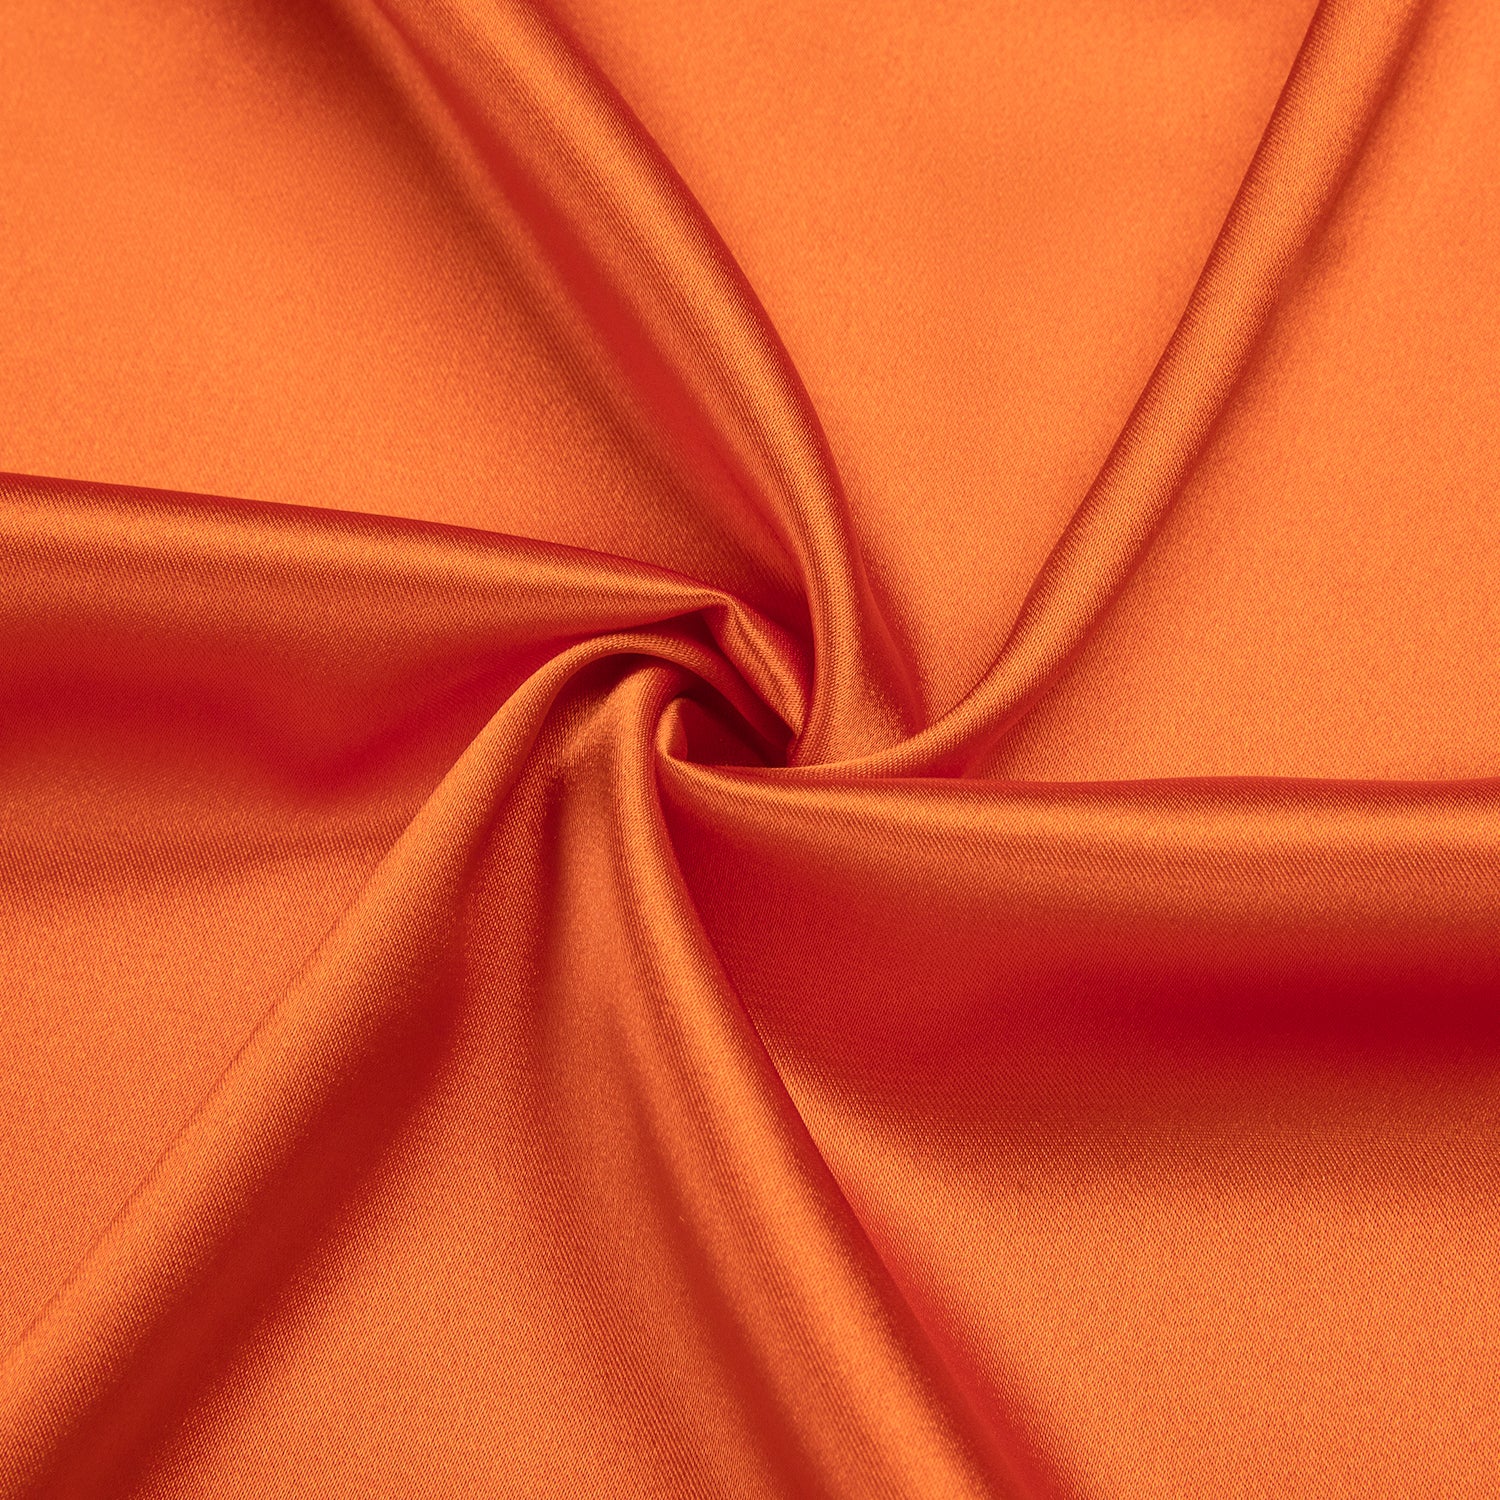 Orange Solid Satin Silk Men's Long Sleeve Dress Shirt